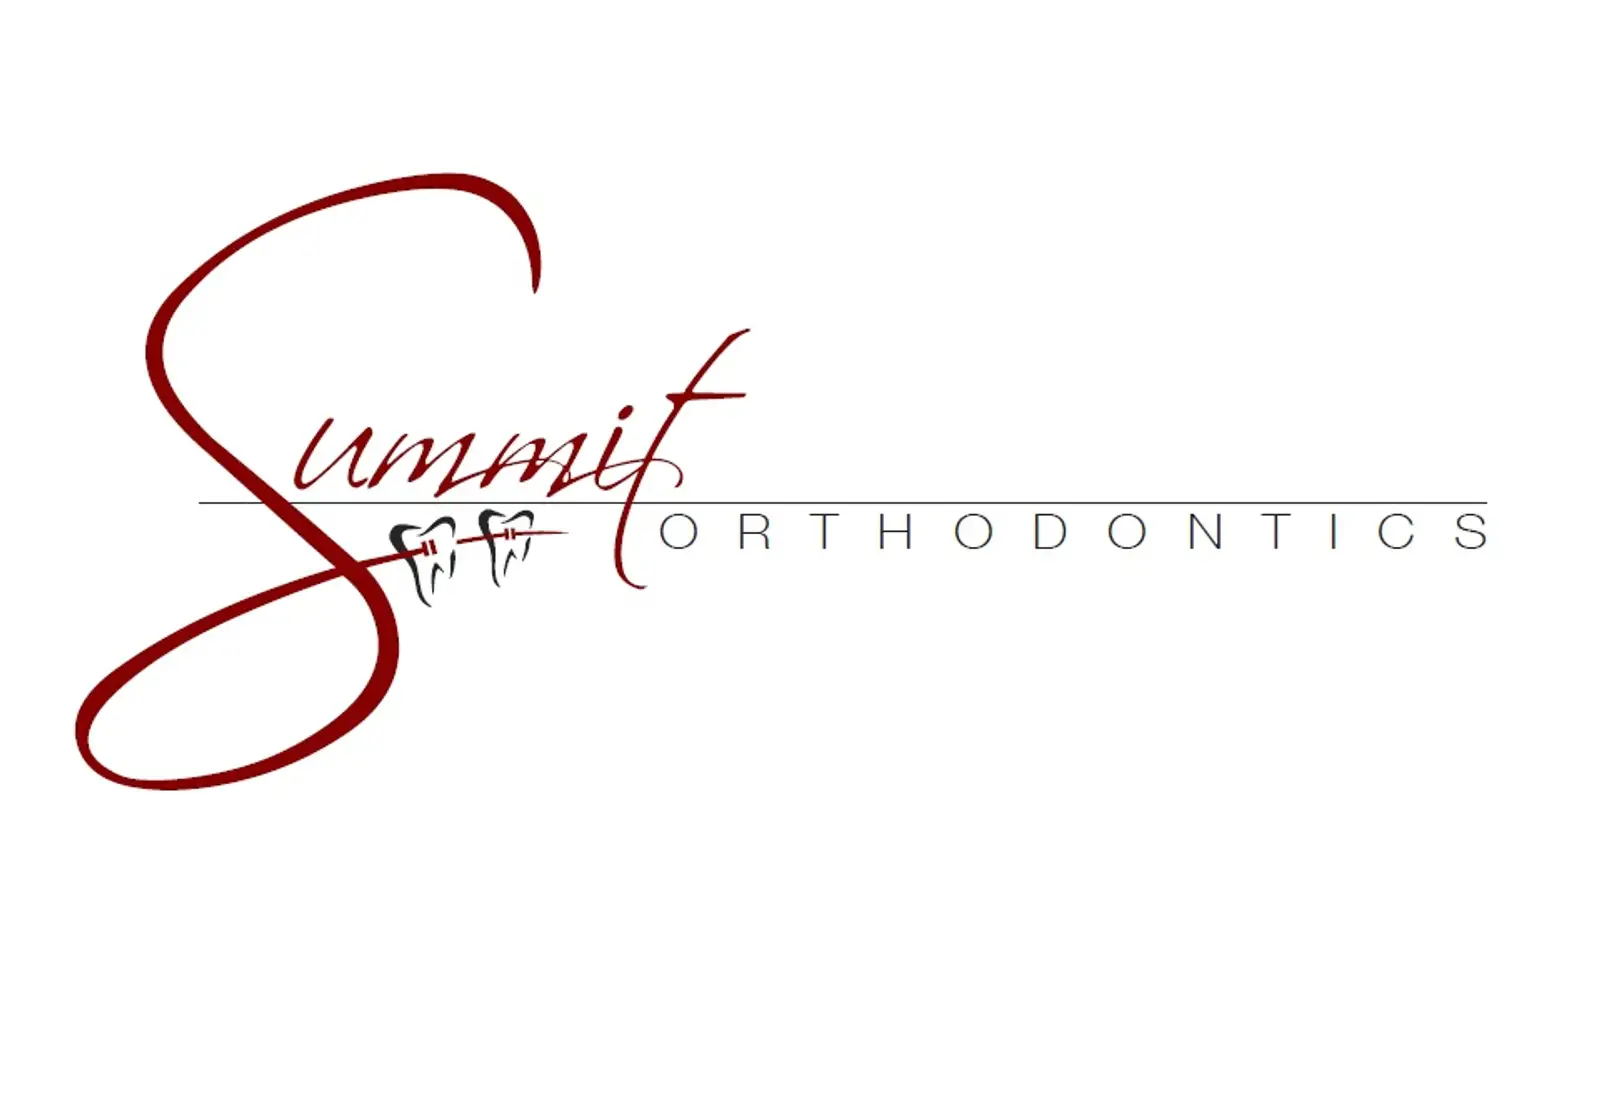 Summit Orthodontics logo